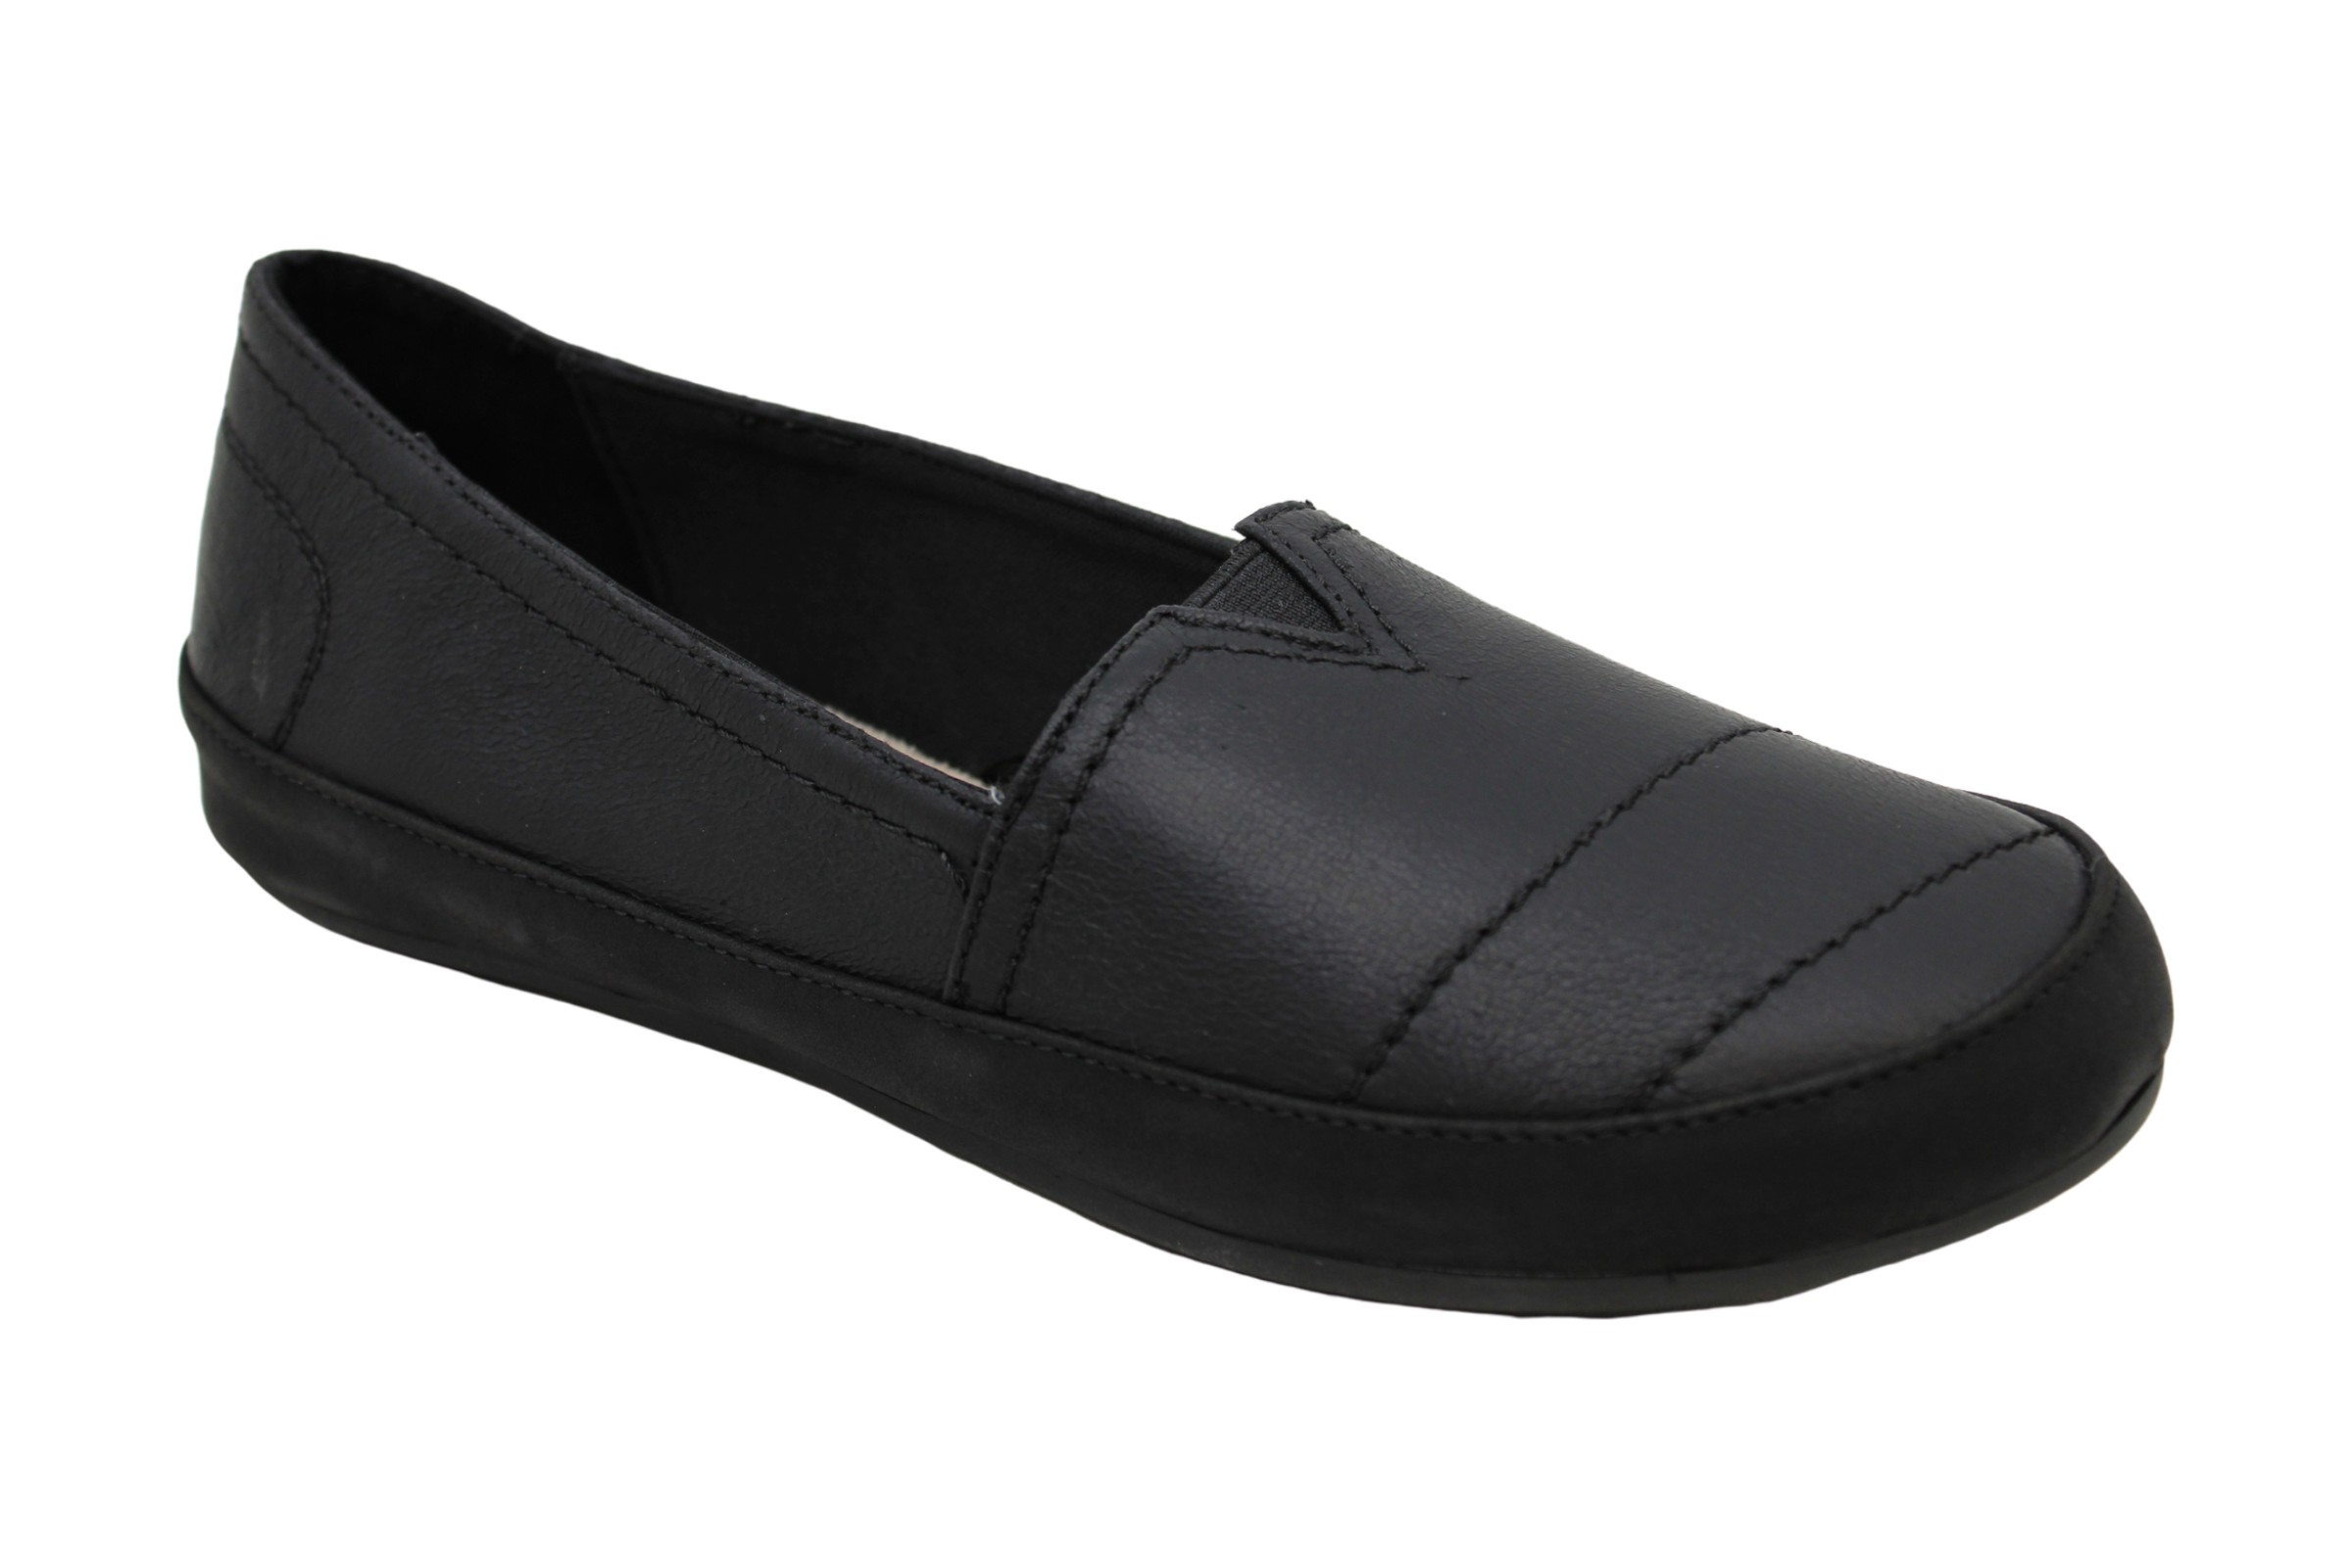 Mia Womens Loafers & SlipOns in Black Color, Size 7 GXV 887696870557 | eBay